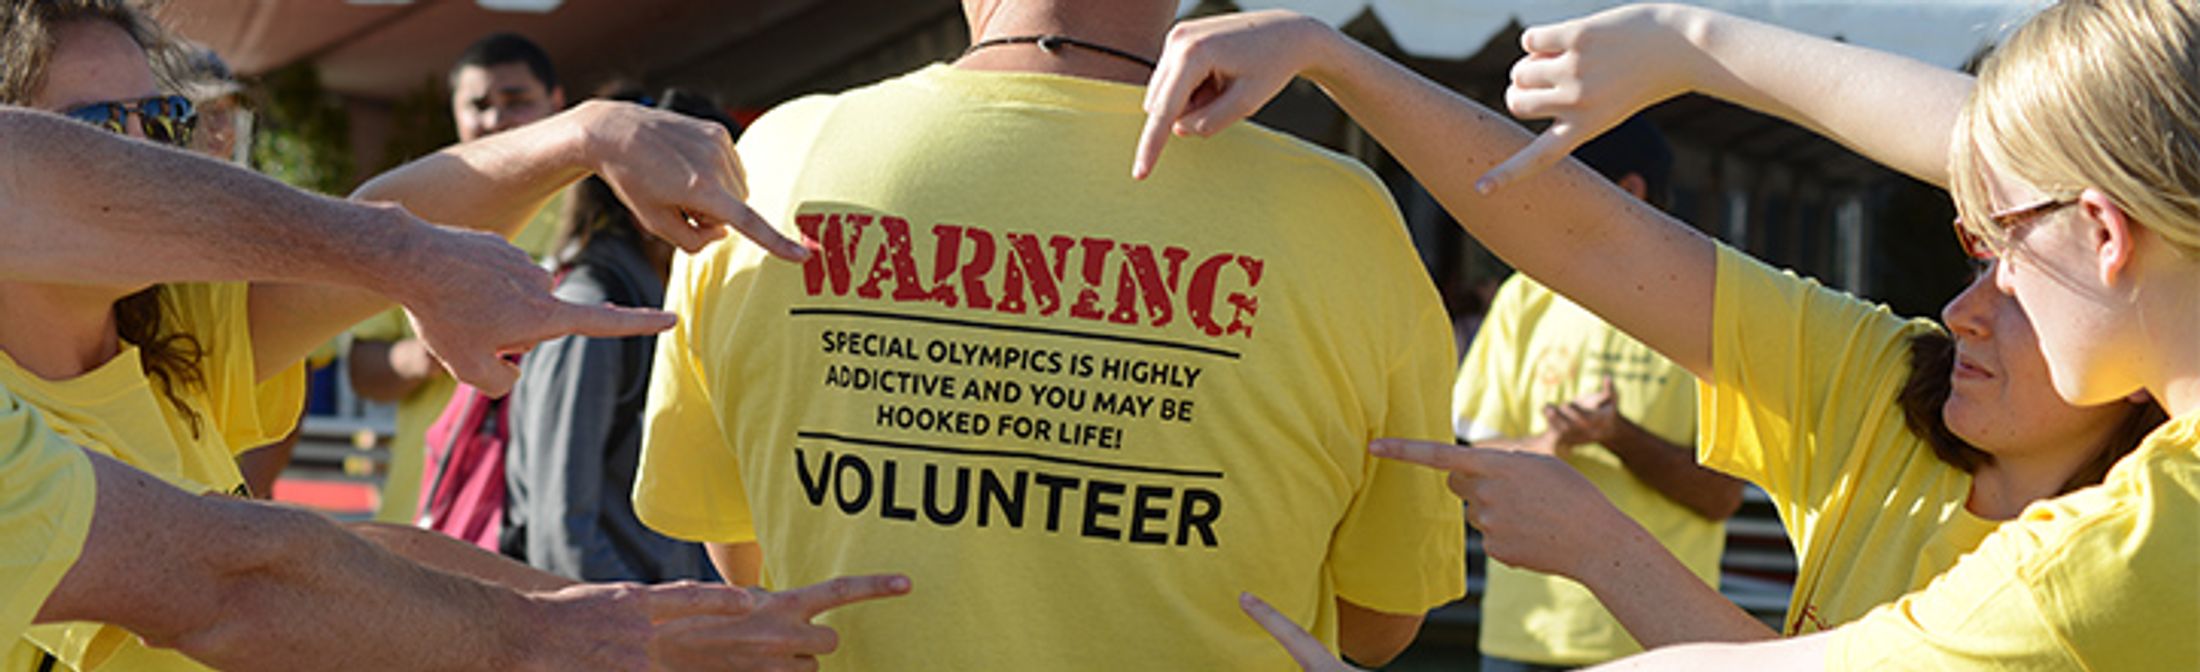 Volunteer 2022 Special Olympics USA Games